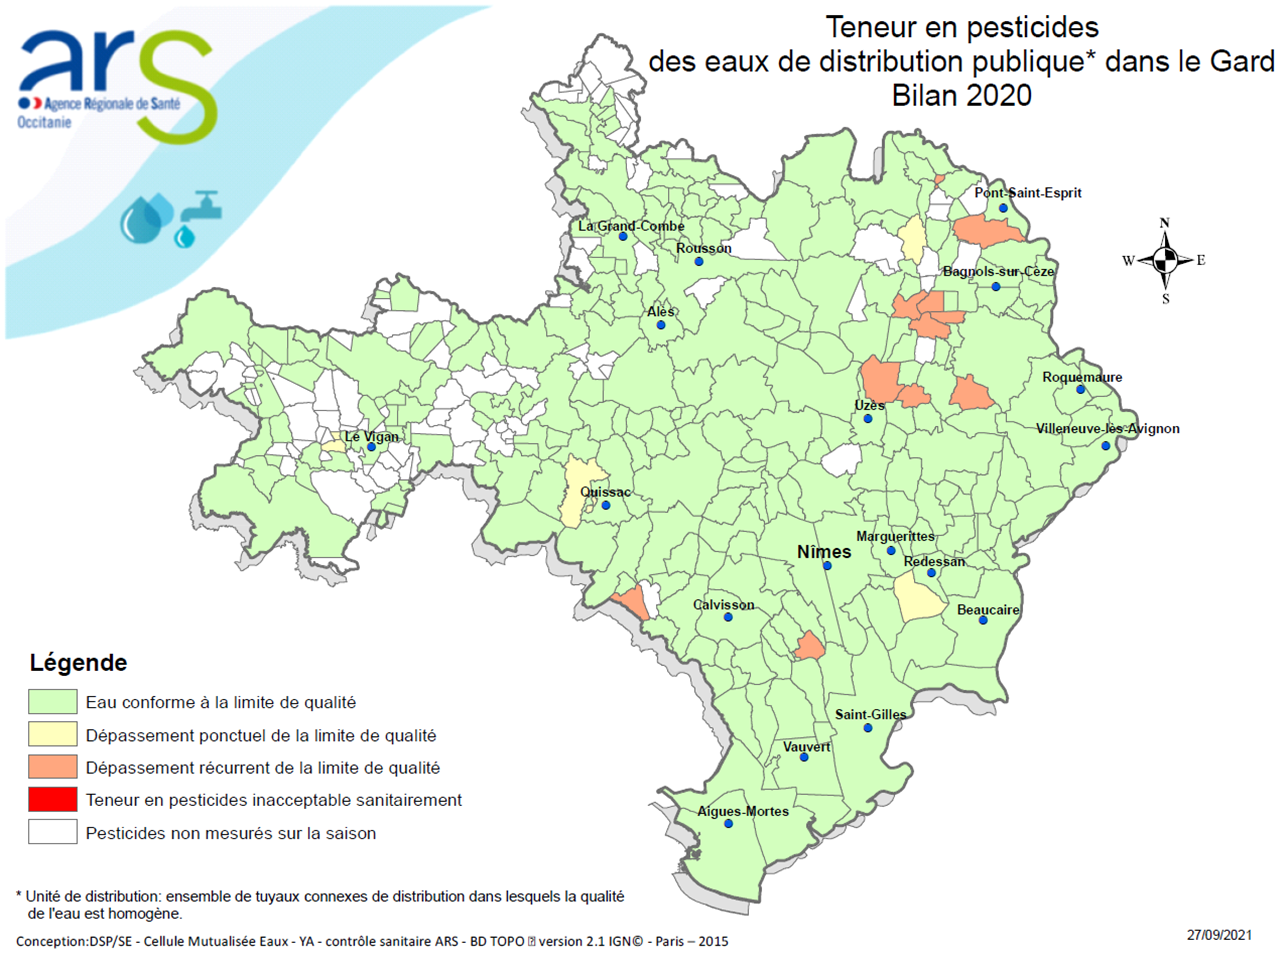 Pesticides Gard (Bilan eau 2020)